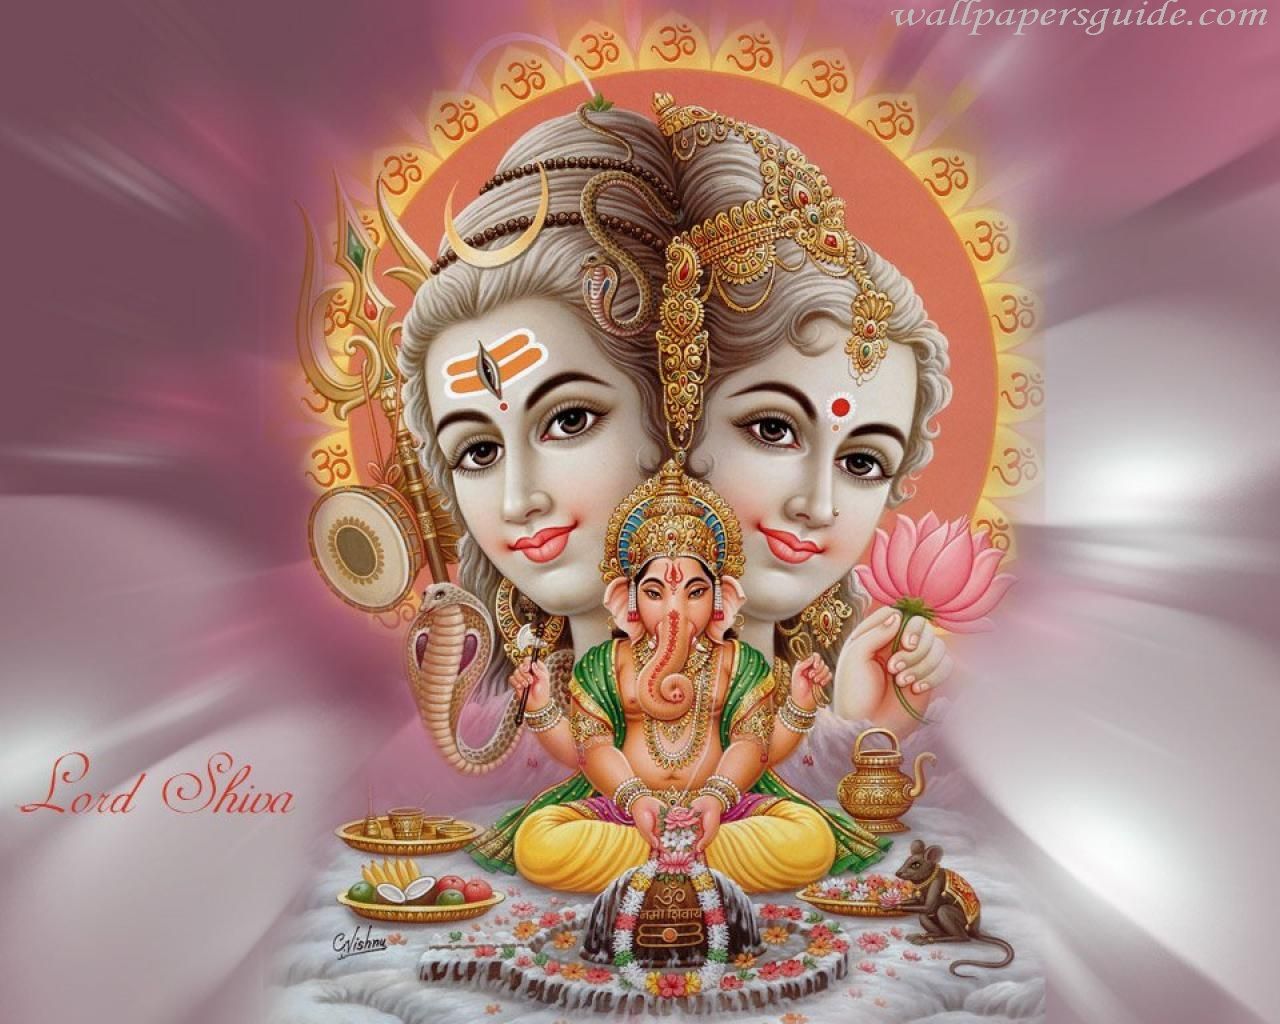 Free download Latest Full HD Quality Desktop Wallpaper Hindu Gods